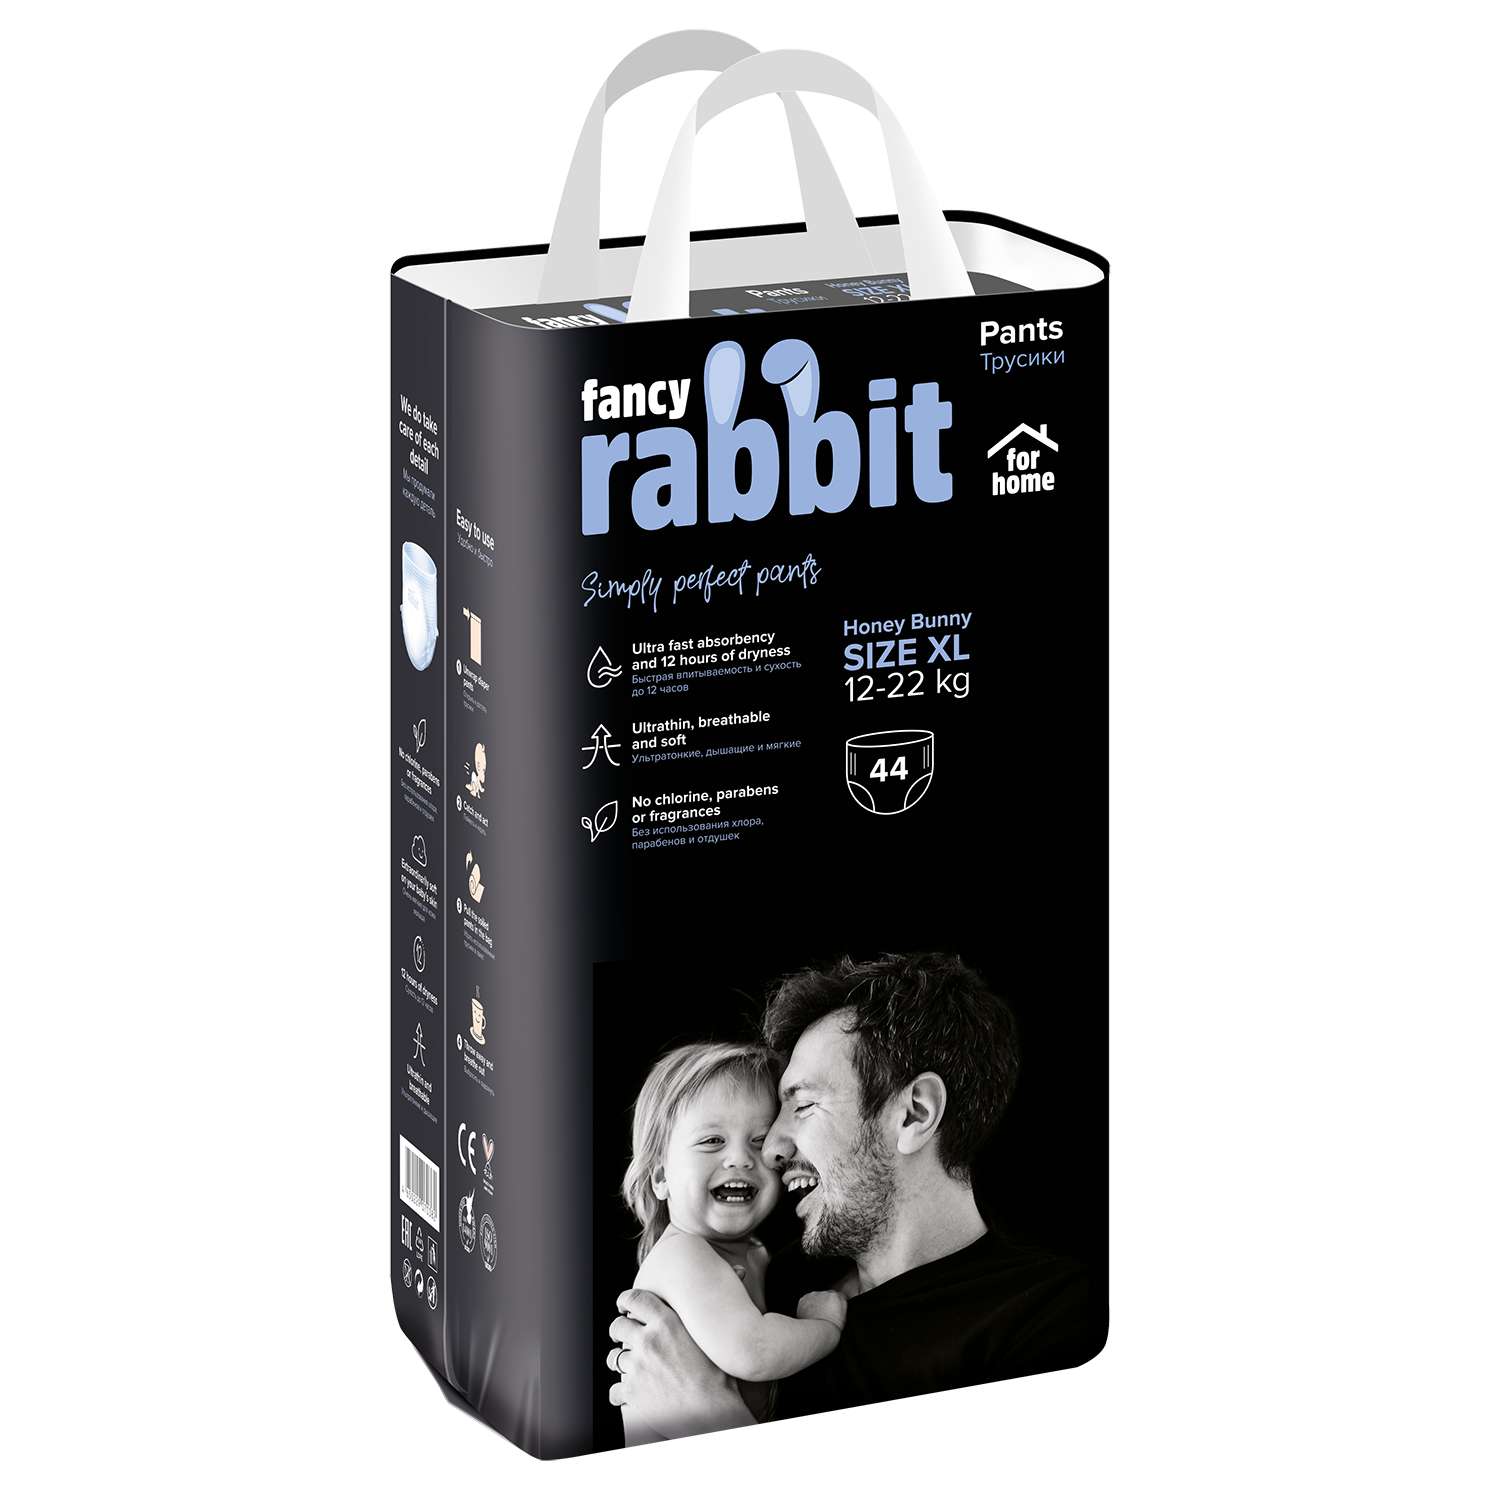 Трусики-подгузники Fancy Rabbit for home 12-22 кг XL 44 шт - фото 1